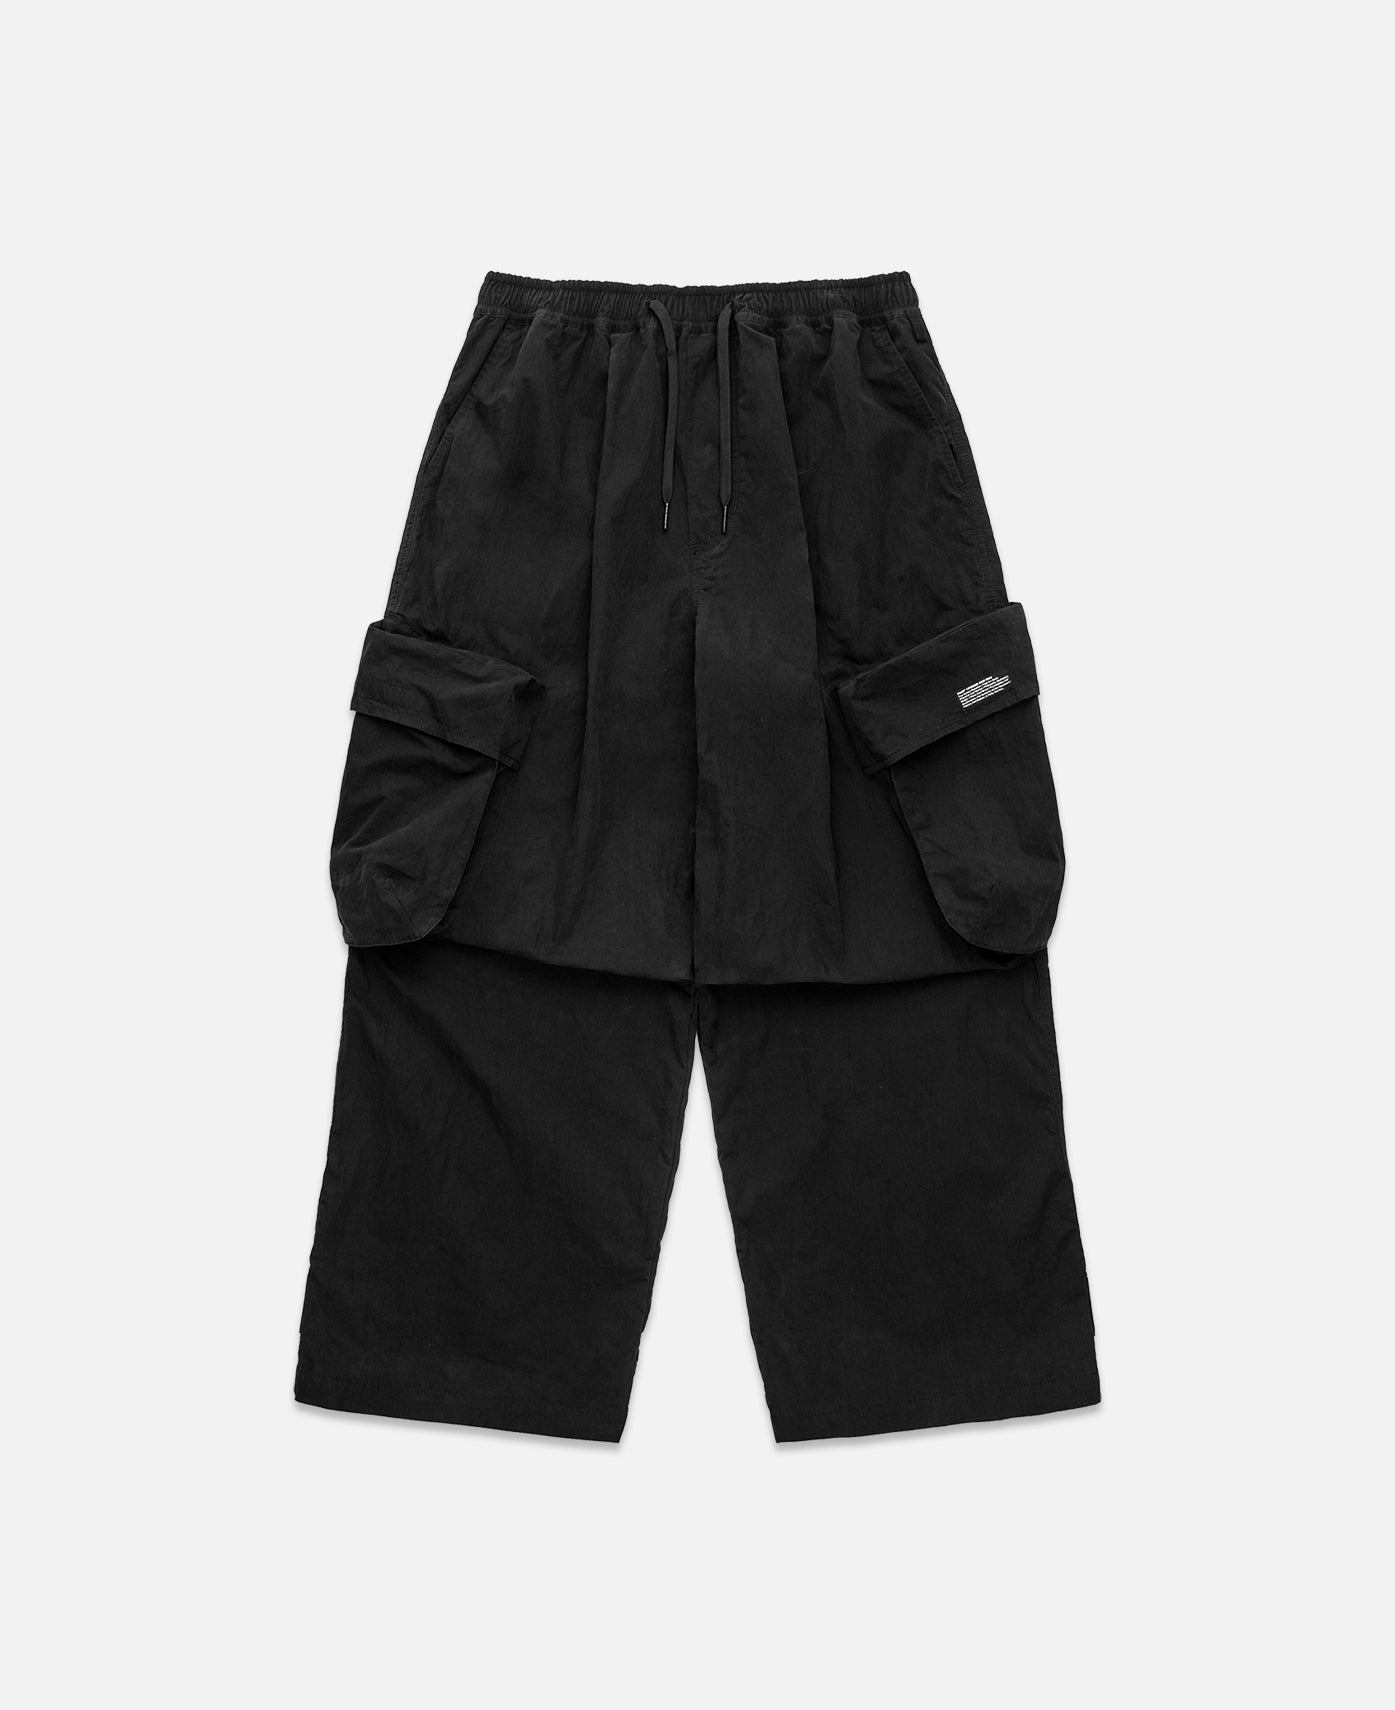 Chow Pants (Black)